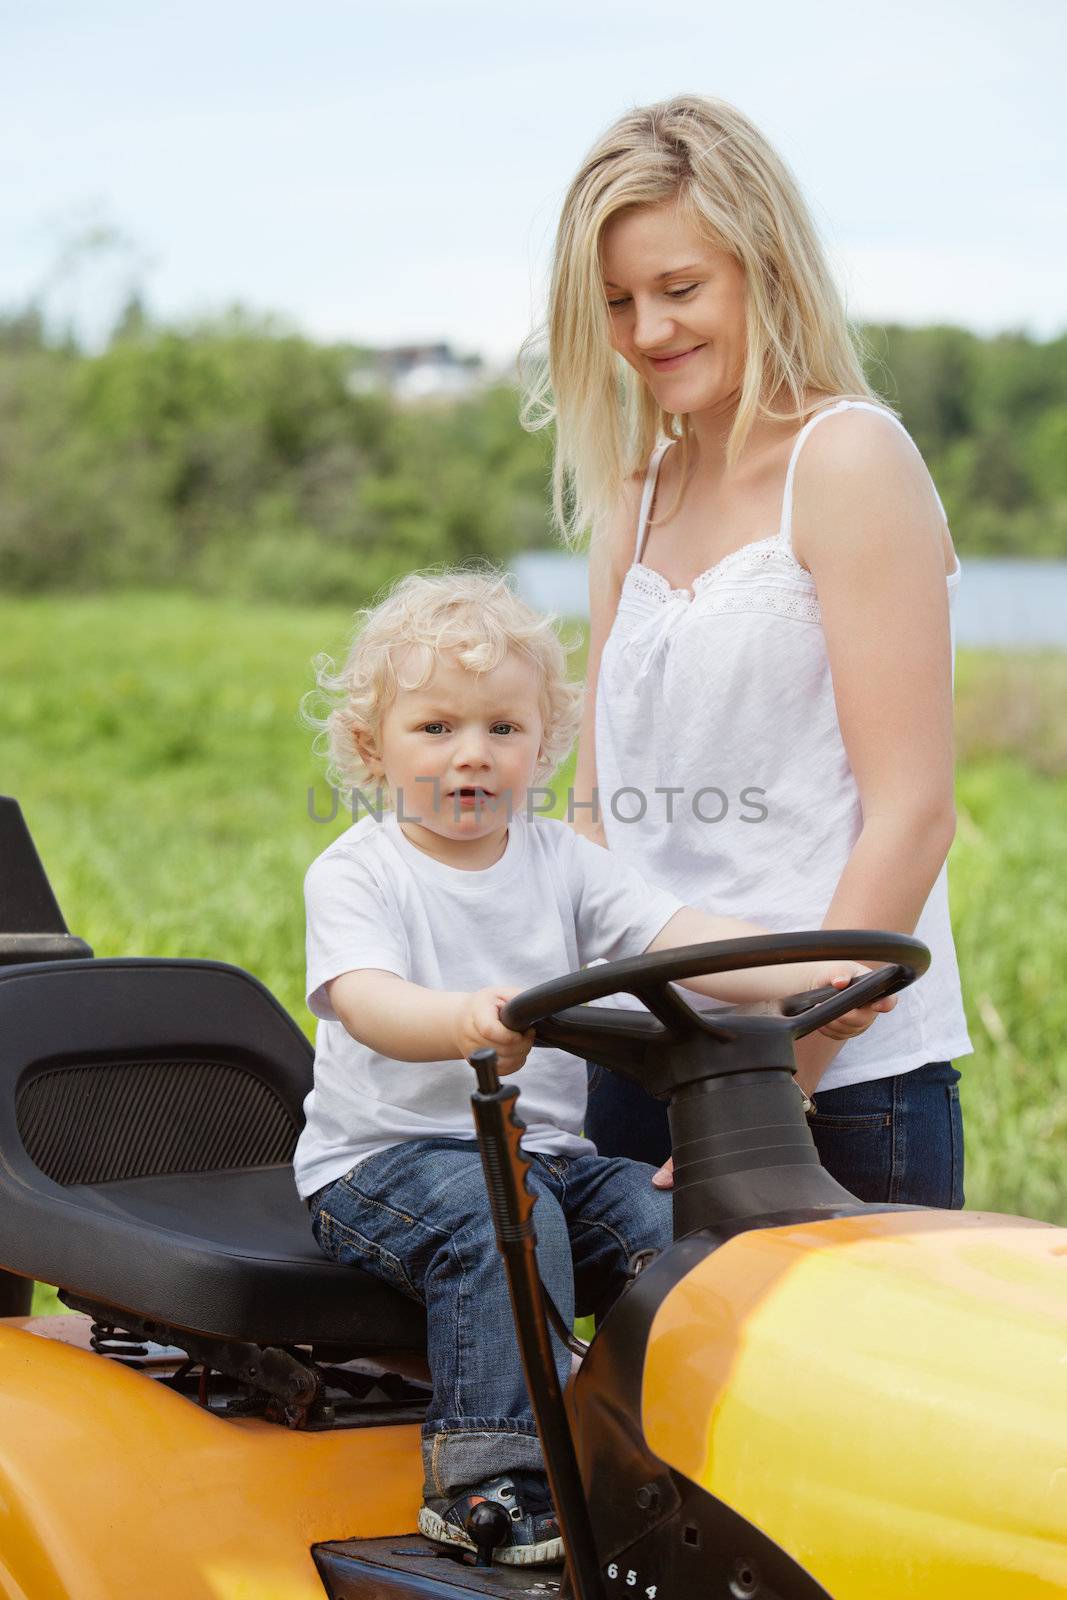 Boy Toddler Sitting on Lawn Tractor by leaf